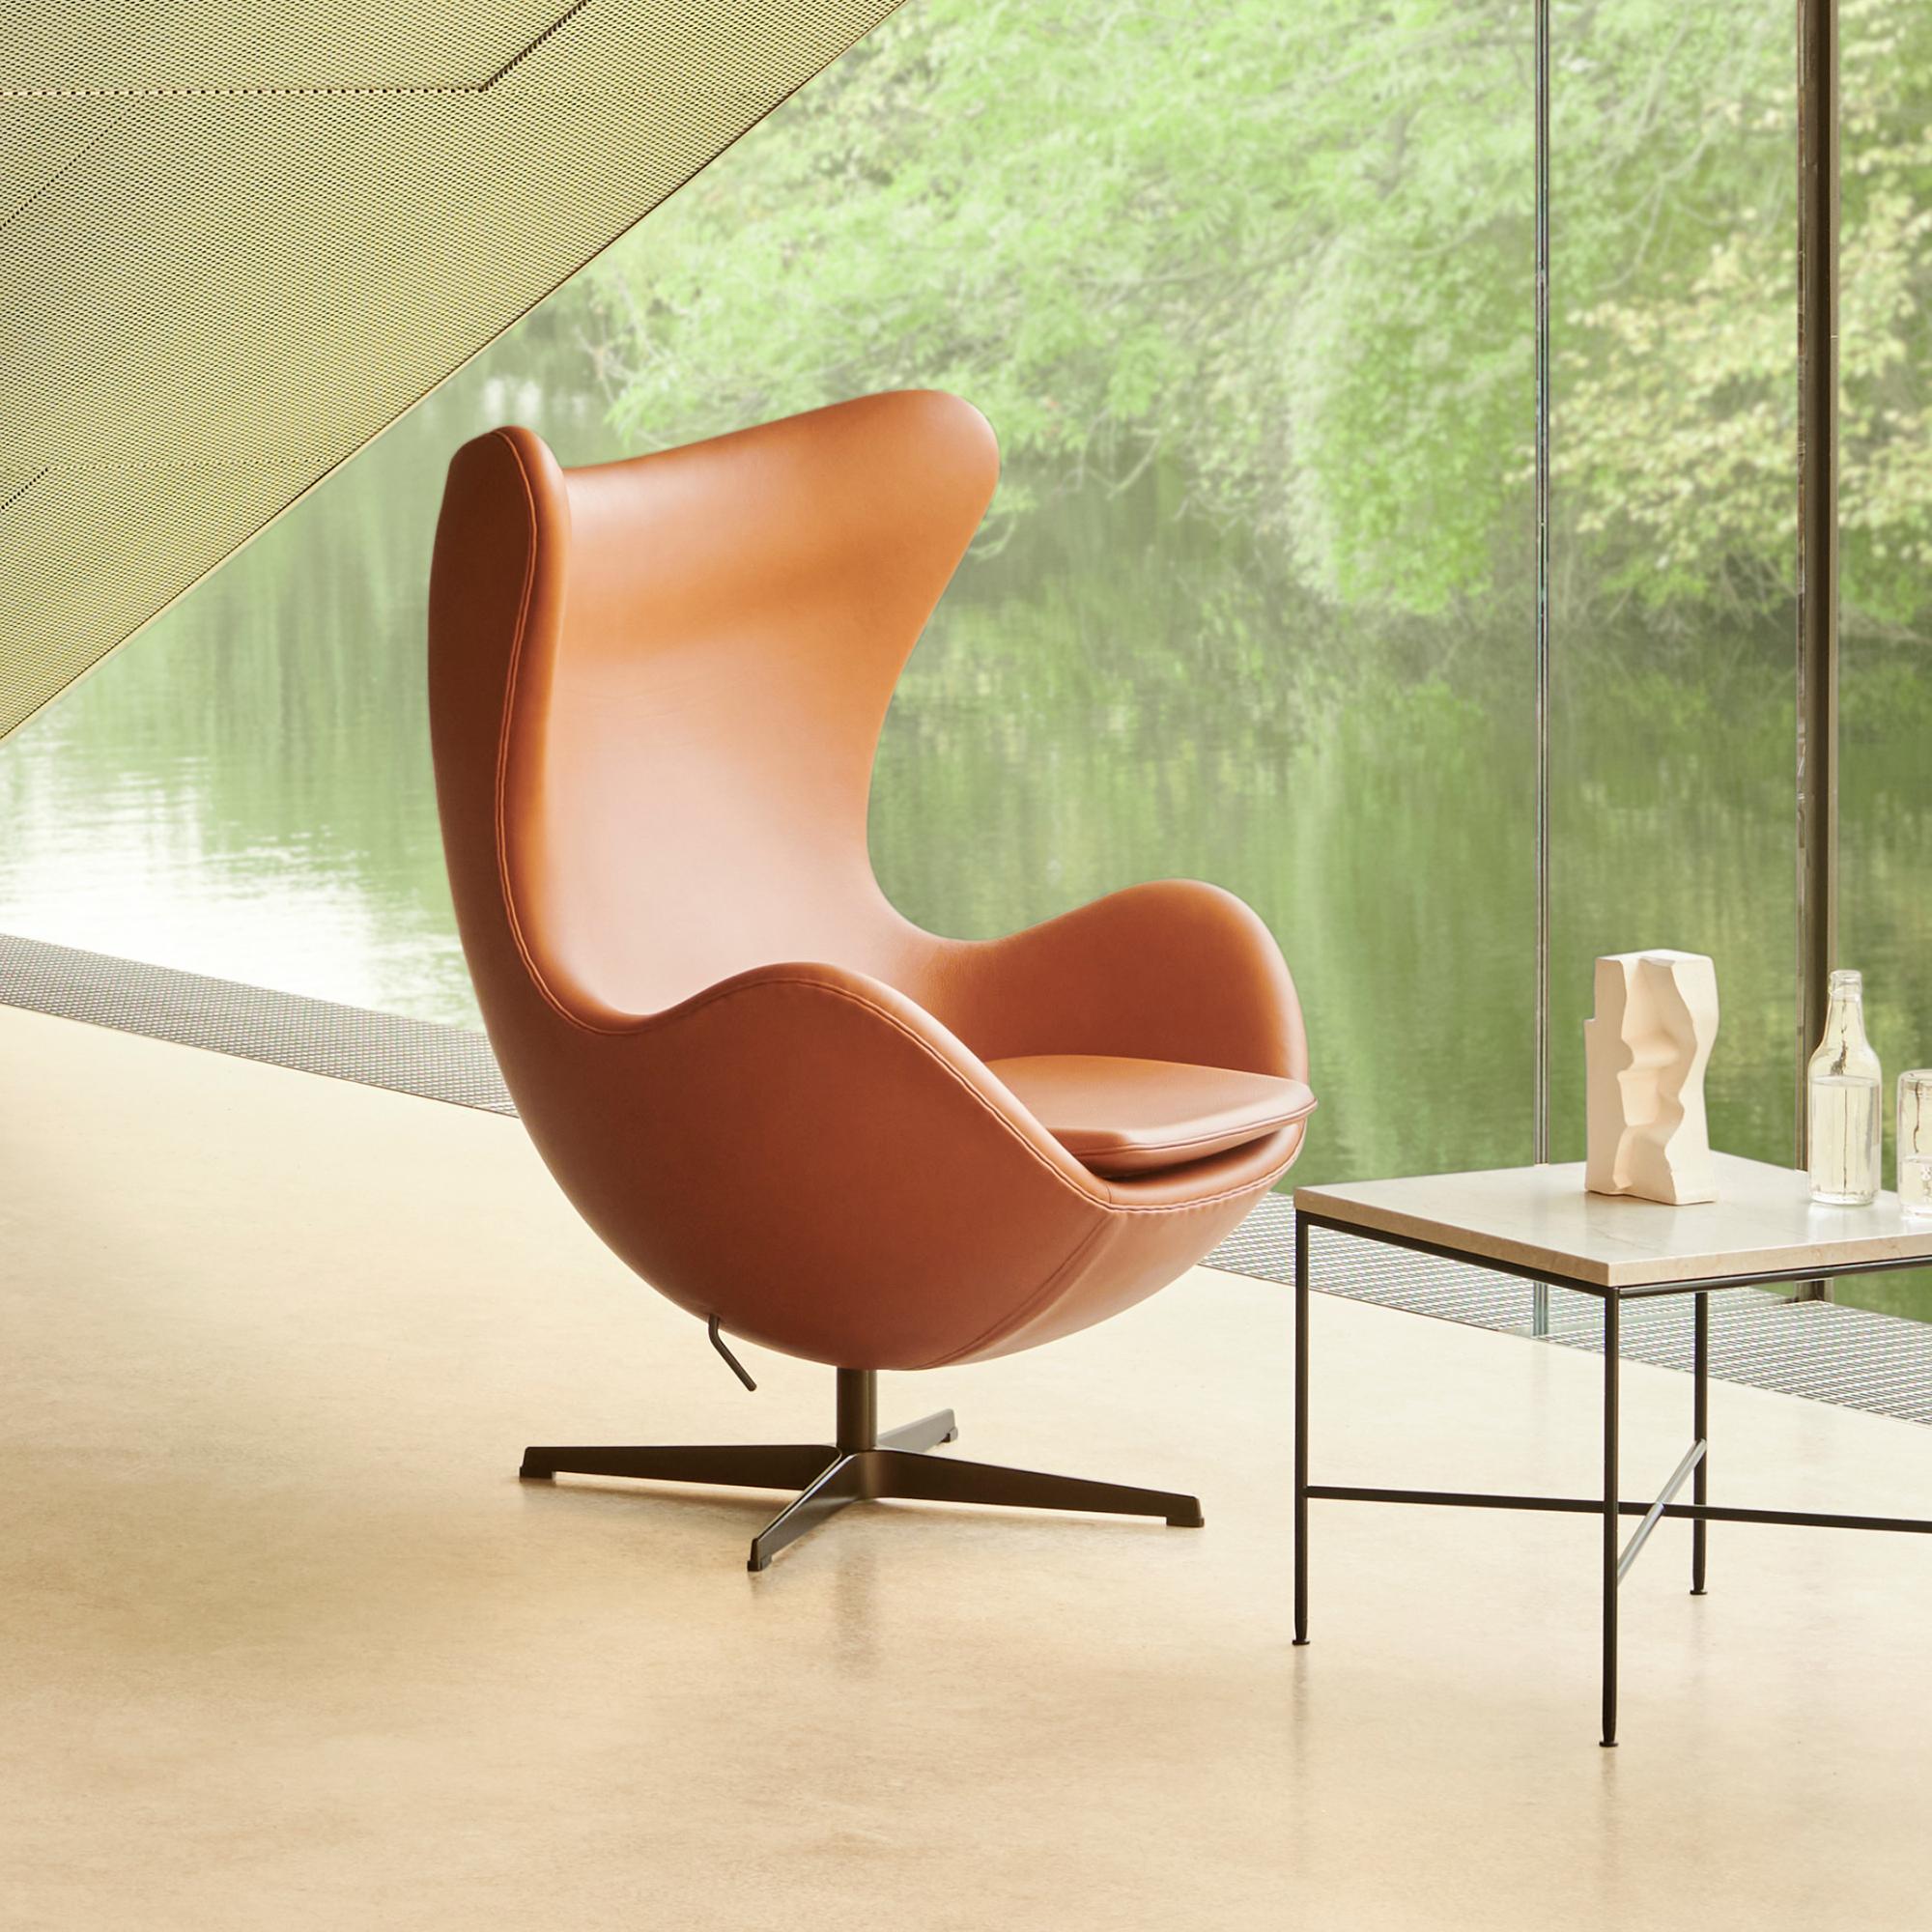 Contemporary Arne Jacobsen 'Egg' Chair for Fritz Hansen in Leather Upholstery (Cat. 5) For Sale